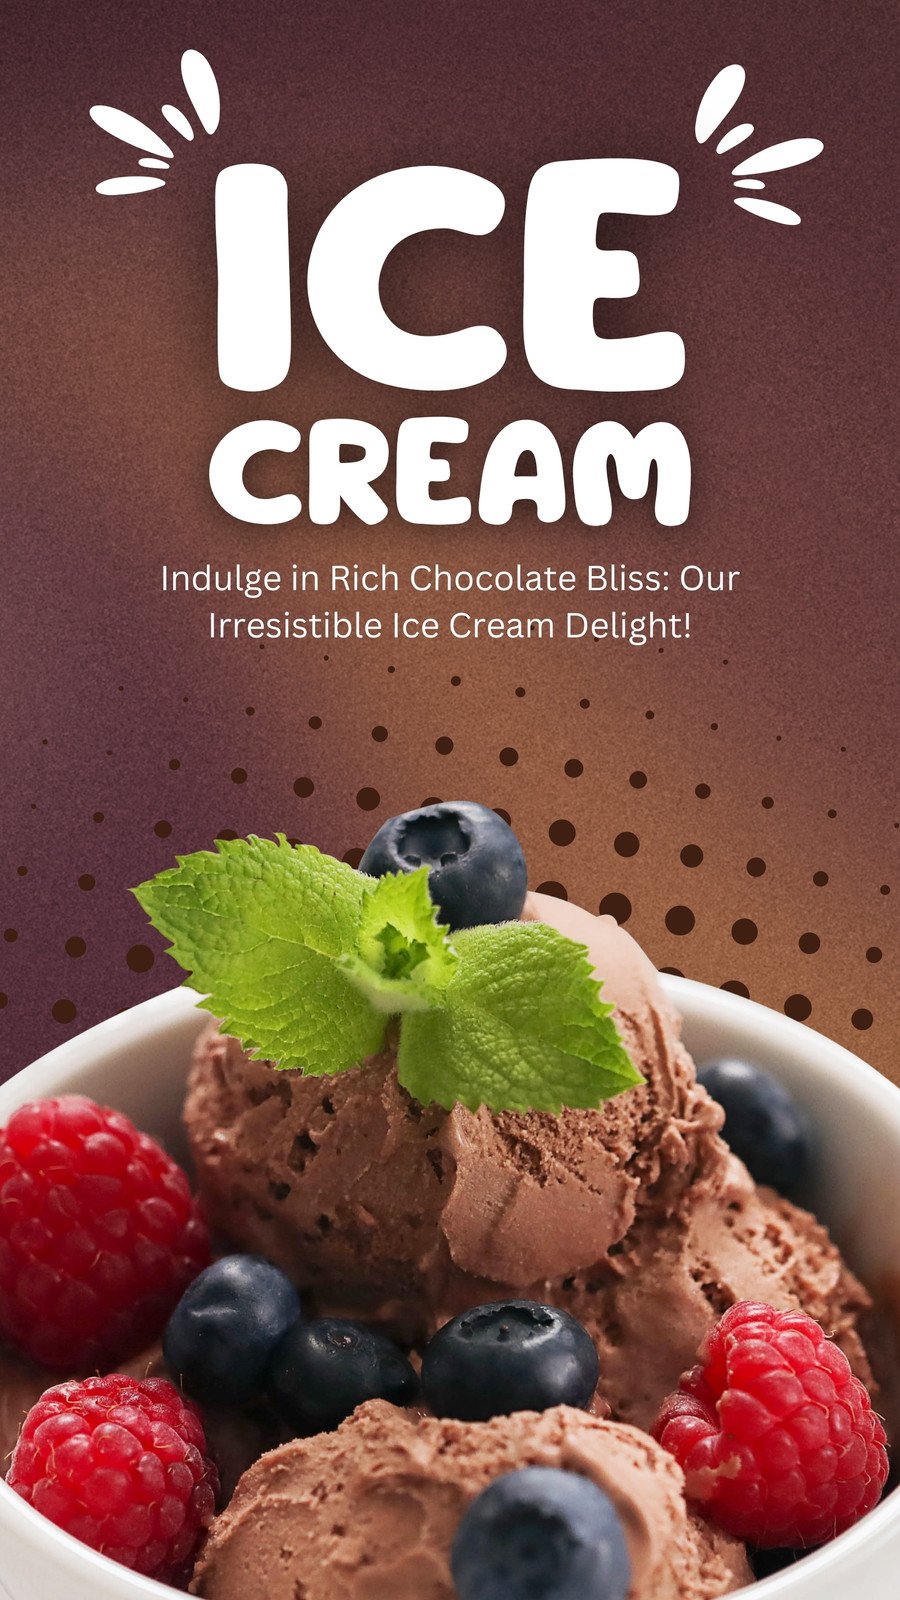 Creative Ice-Cream Store Design Has Power-Tool Theme